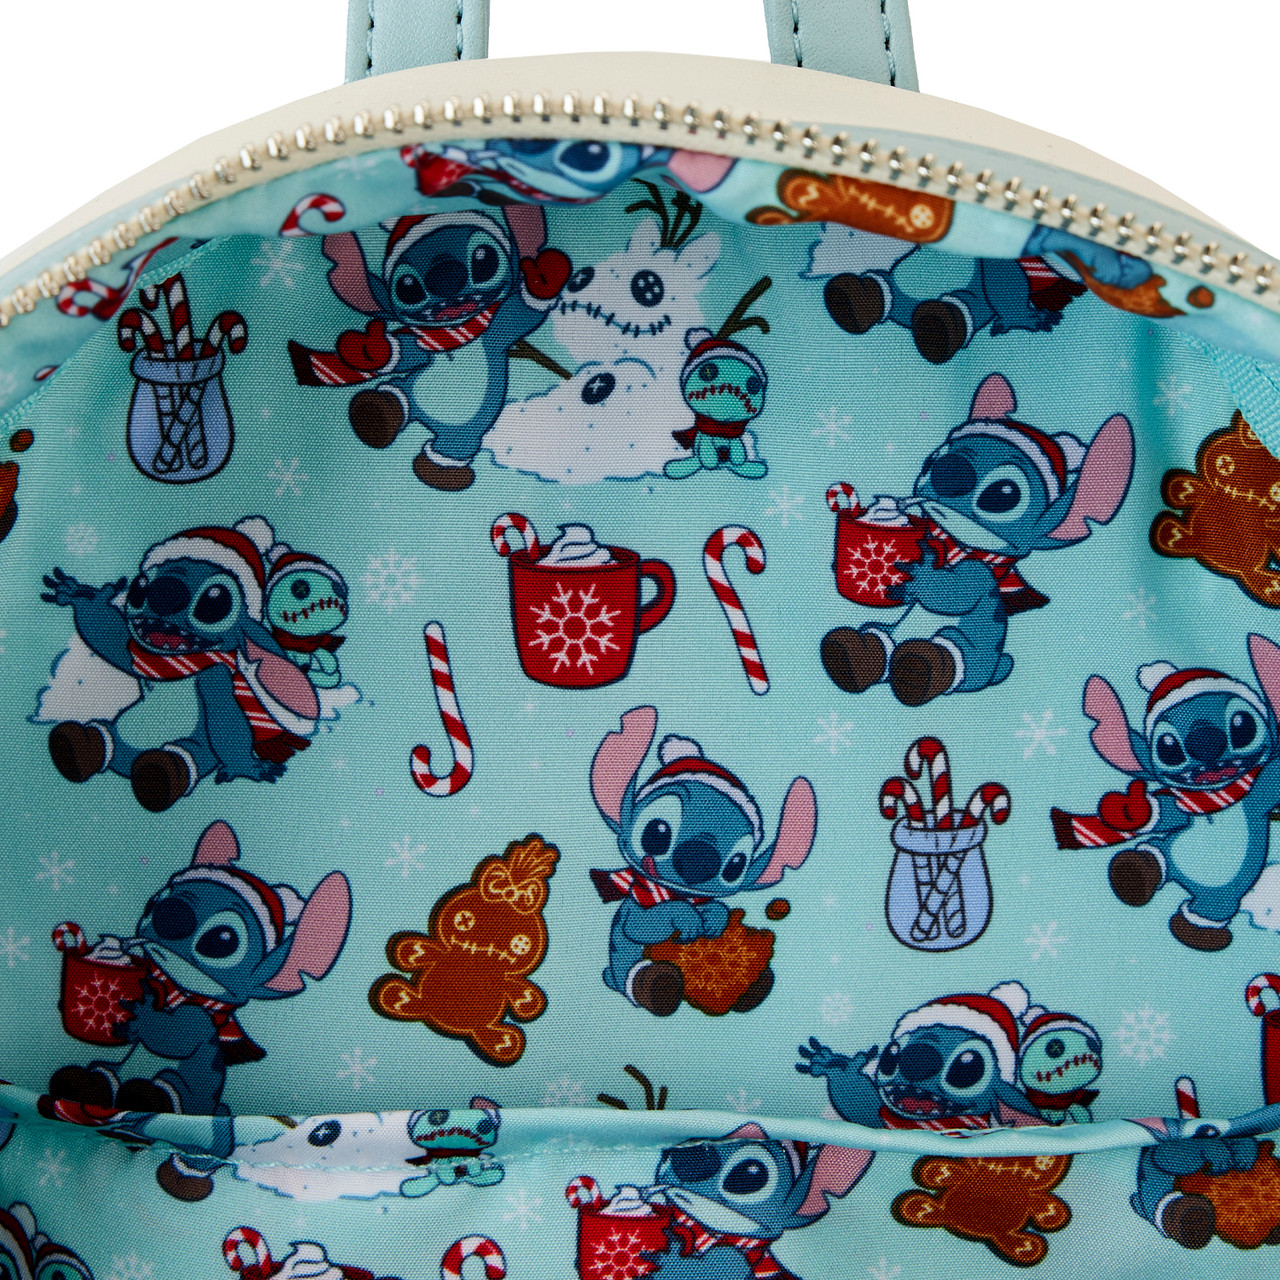 Disney Stitch Devil Cosplay Mini Backpack